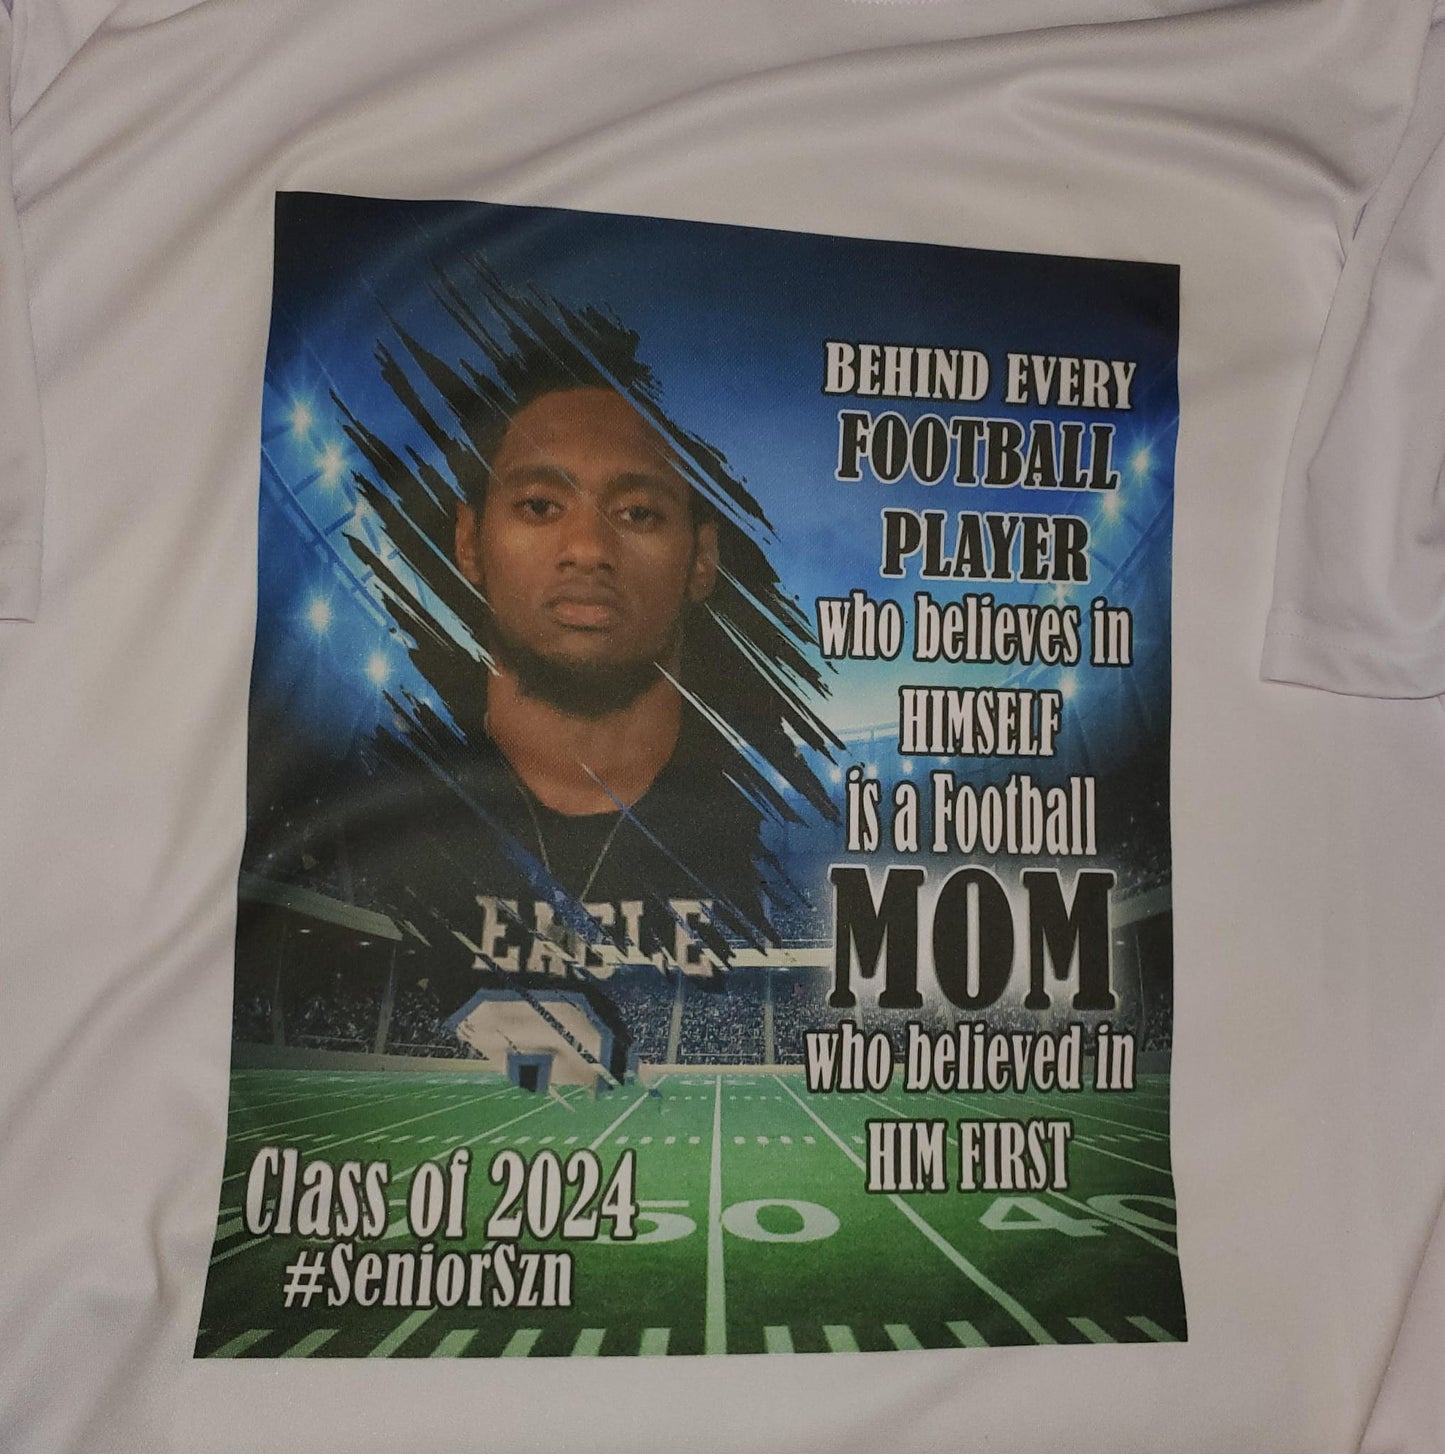 Football Parent Believe in their Player Shirt